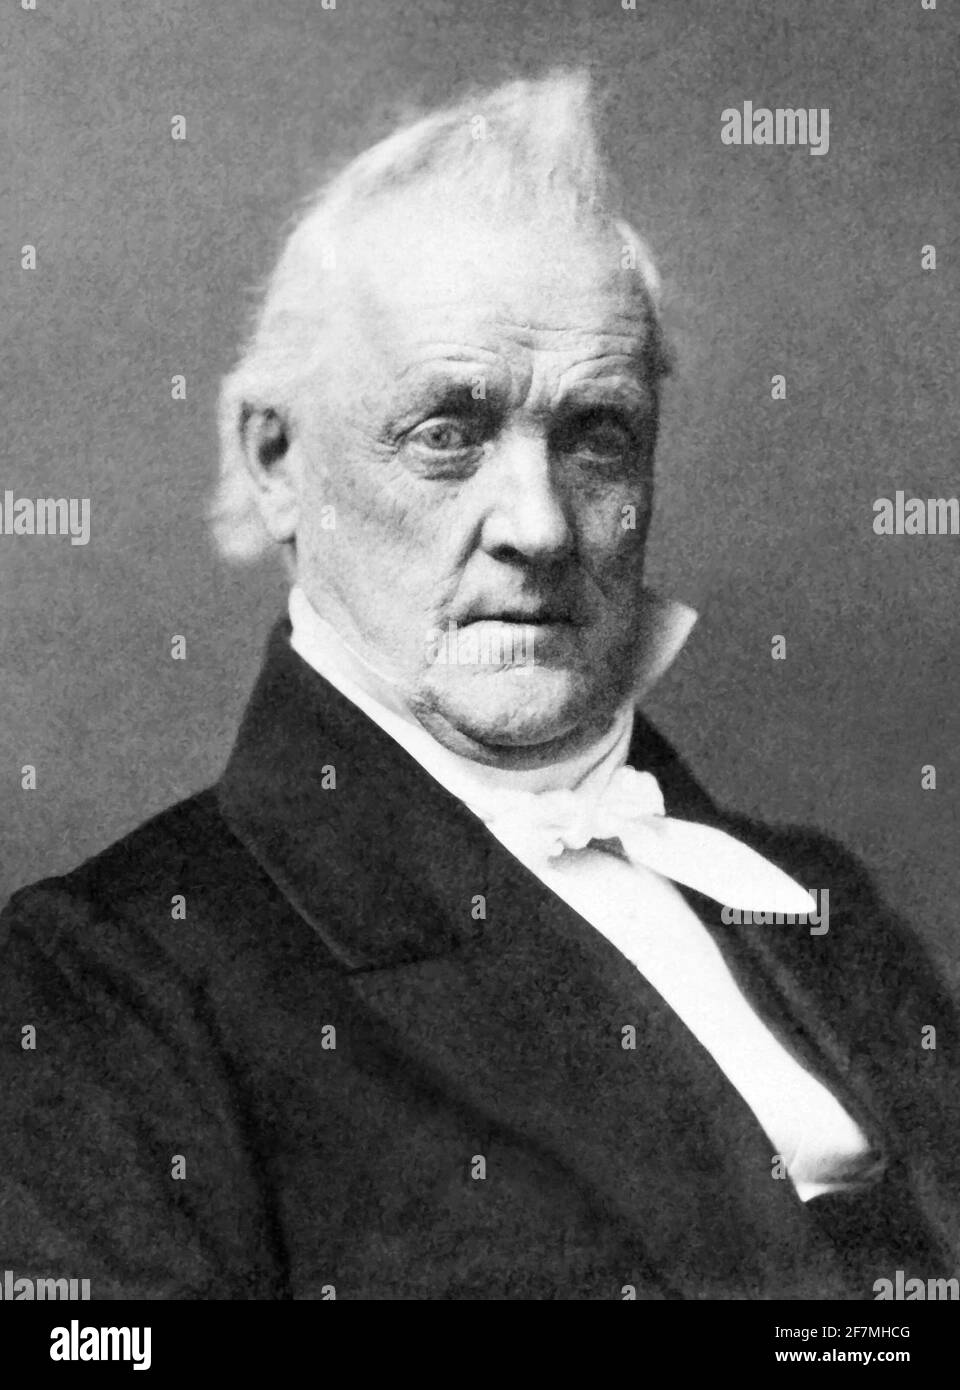 Vintage-Portraitfoto von James Buchanan (1791 – 1868) – dem 15. US-Präsidenten (1857 - 1861). Foto ca. 1865. Stockfoto